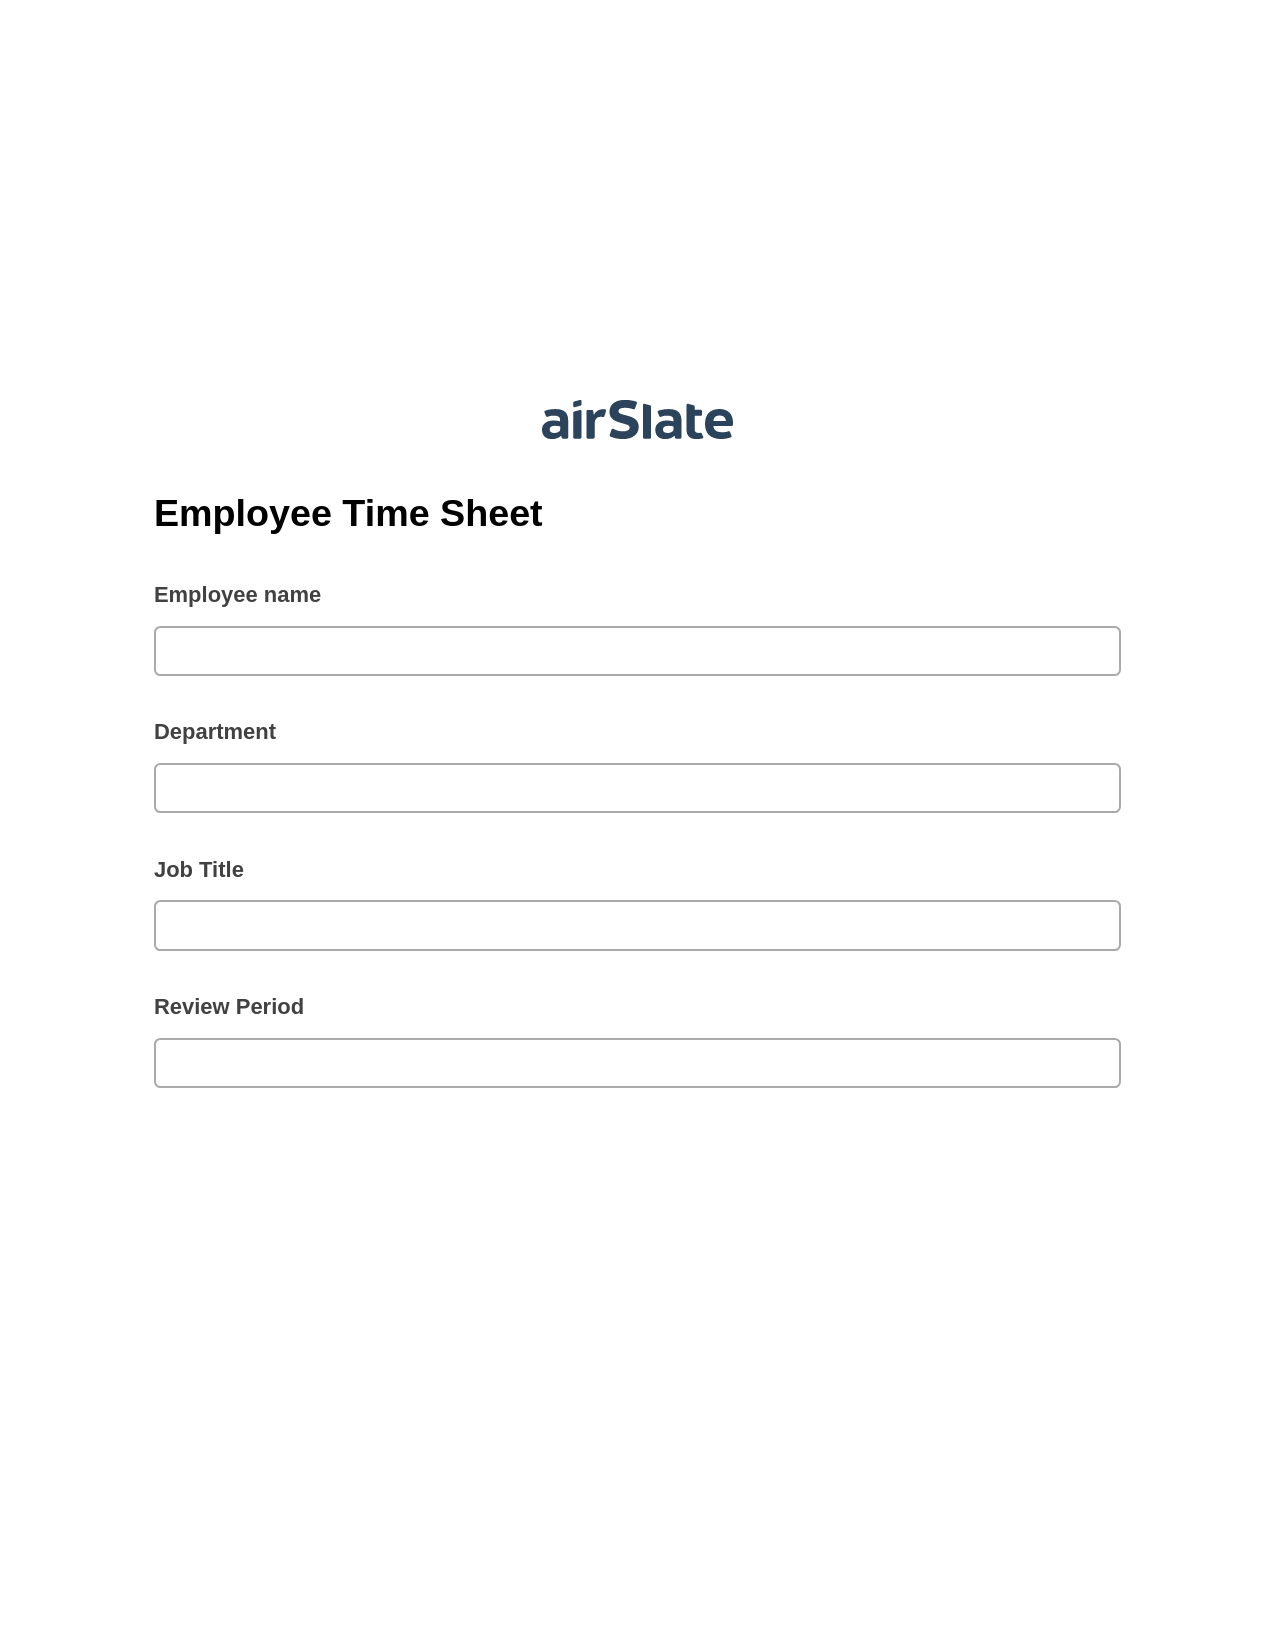 Multirole Employee Time Sheet Prefill from NetSuite records, Create Salesforce Records Bot, Slack Two-Way Binding Bot